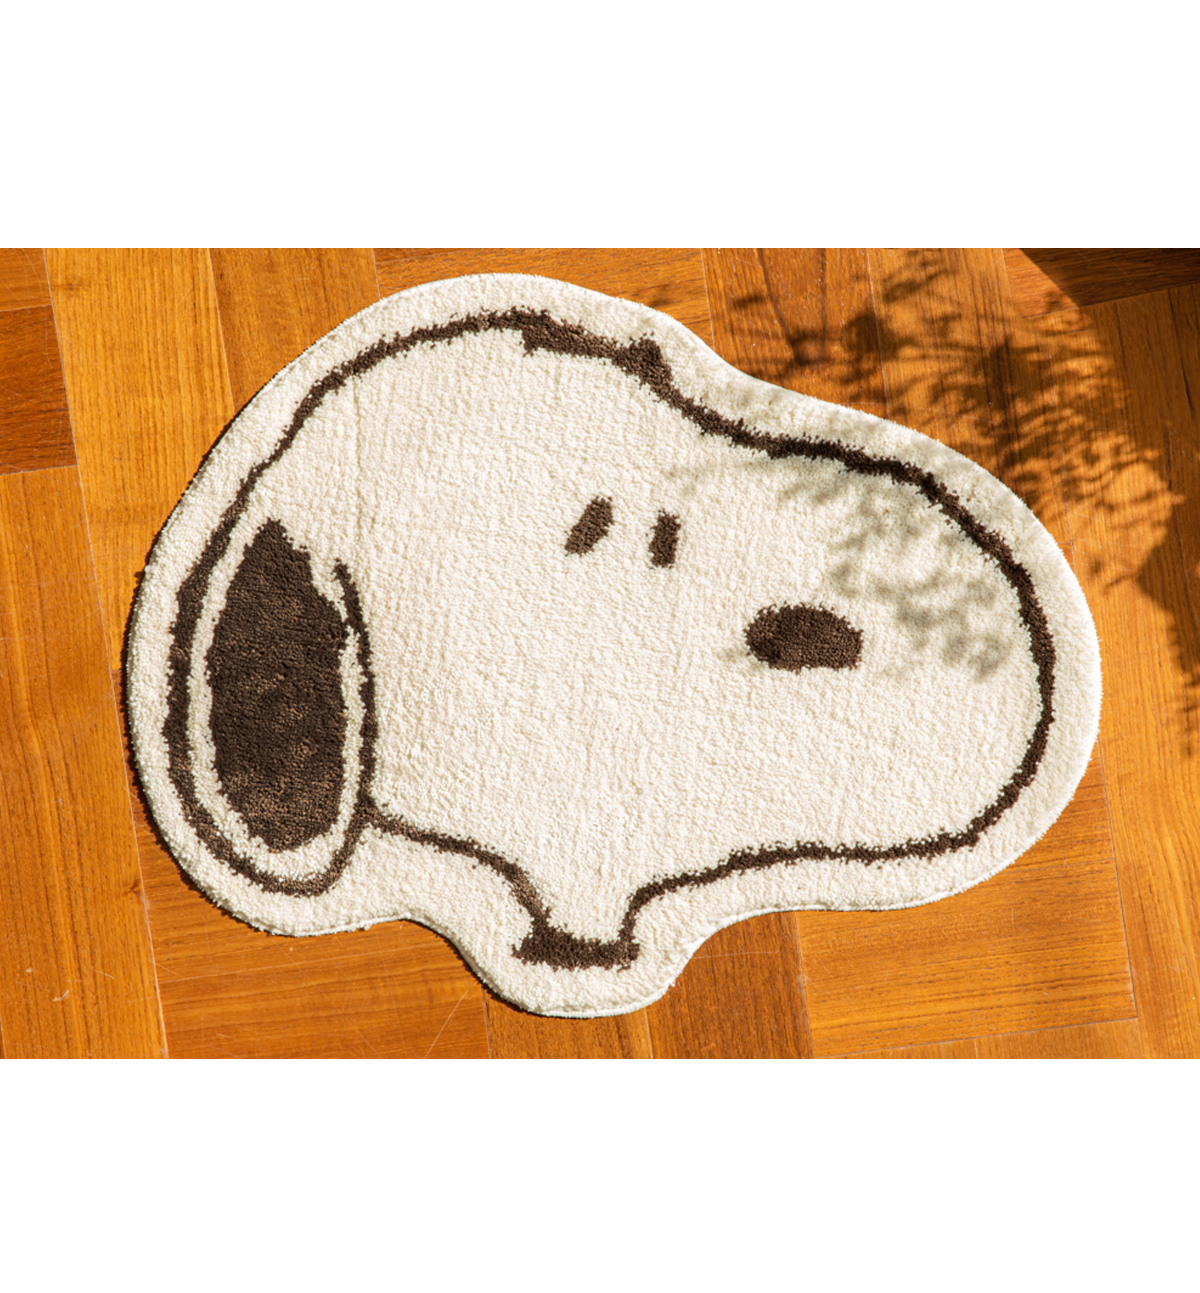 Snoopy Face Rug